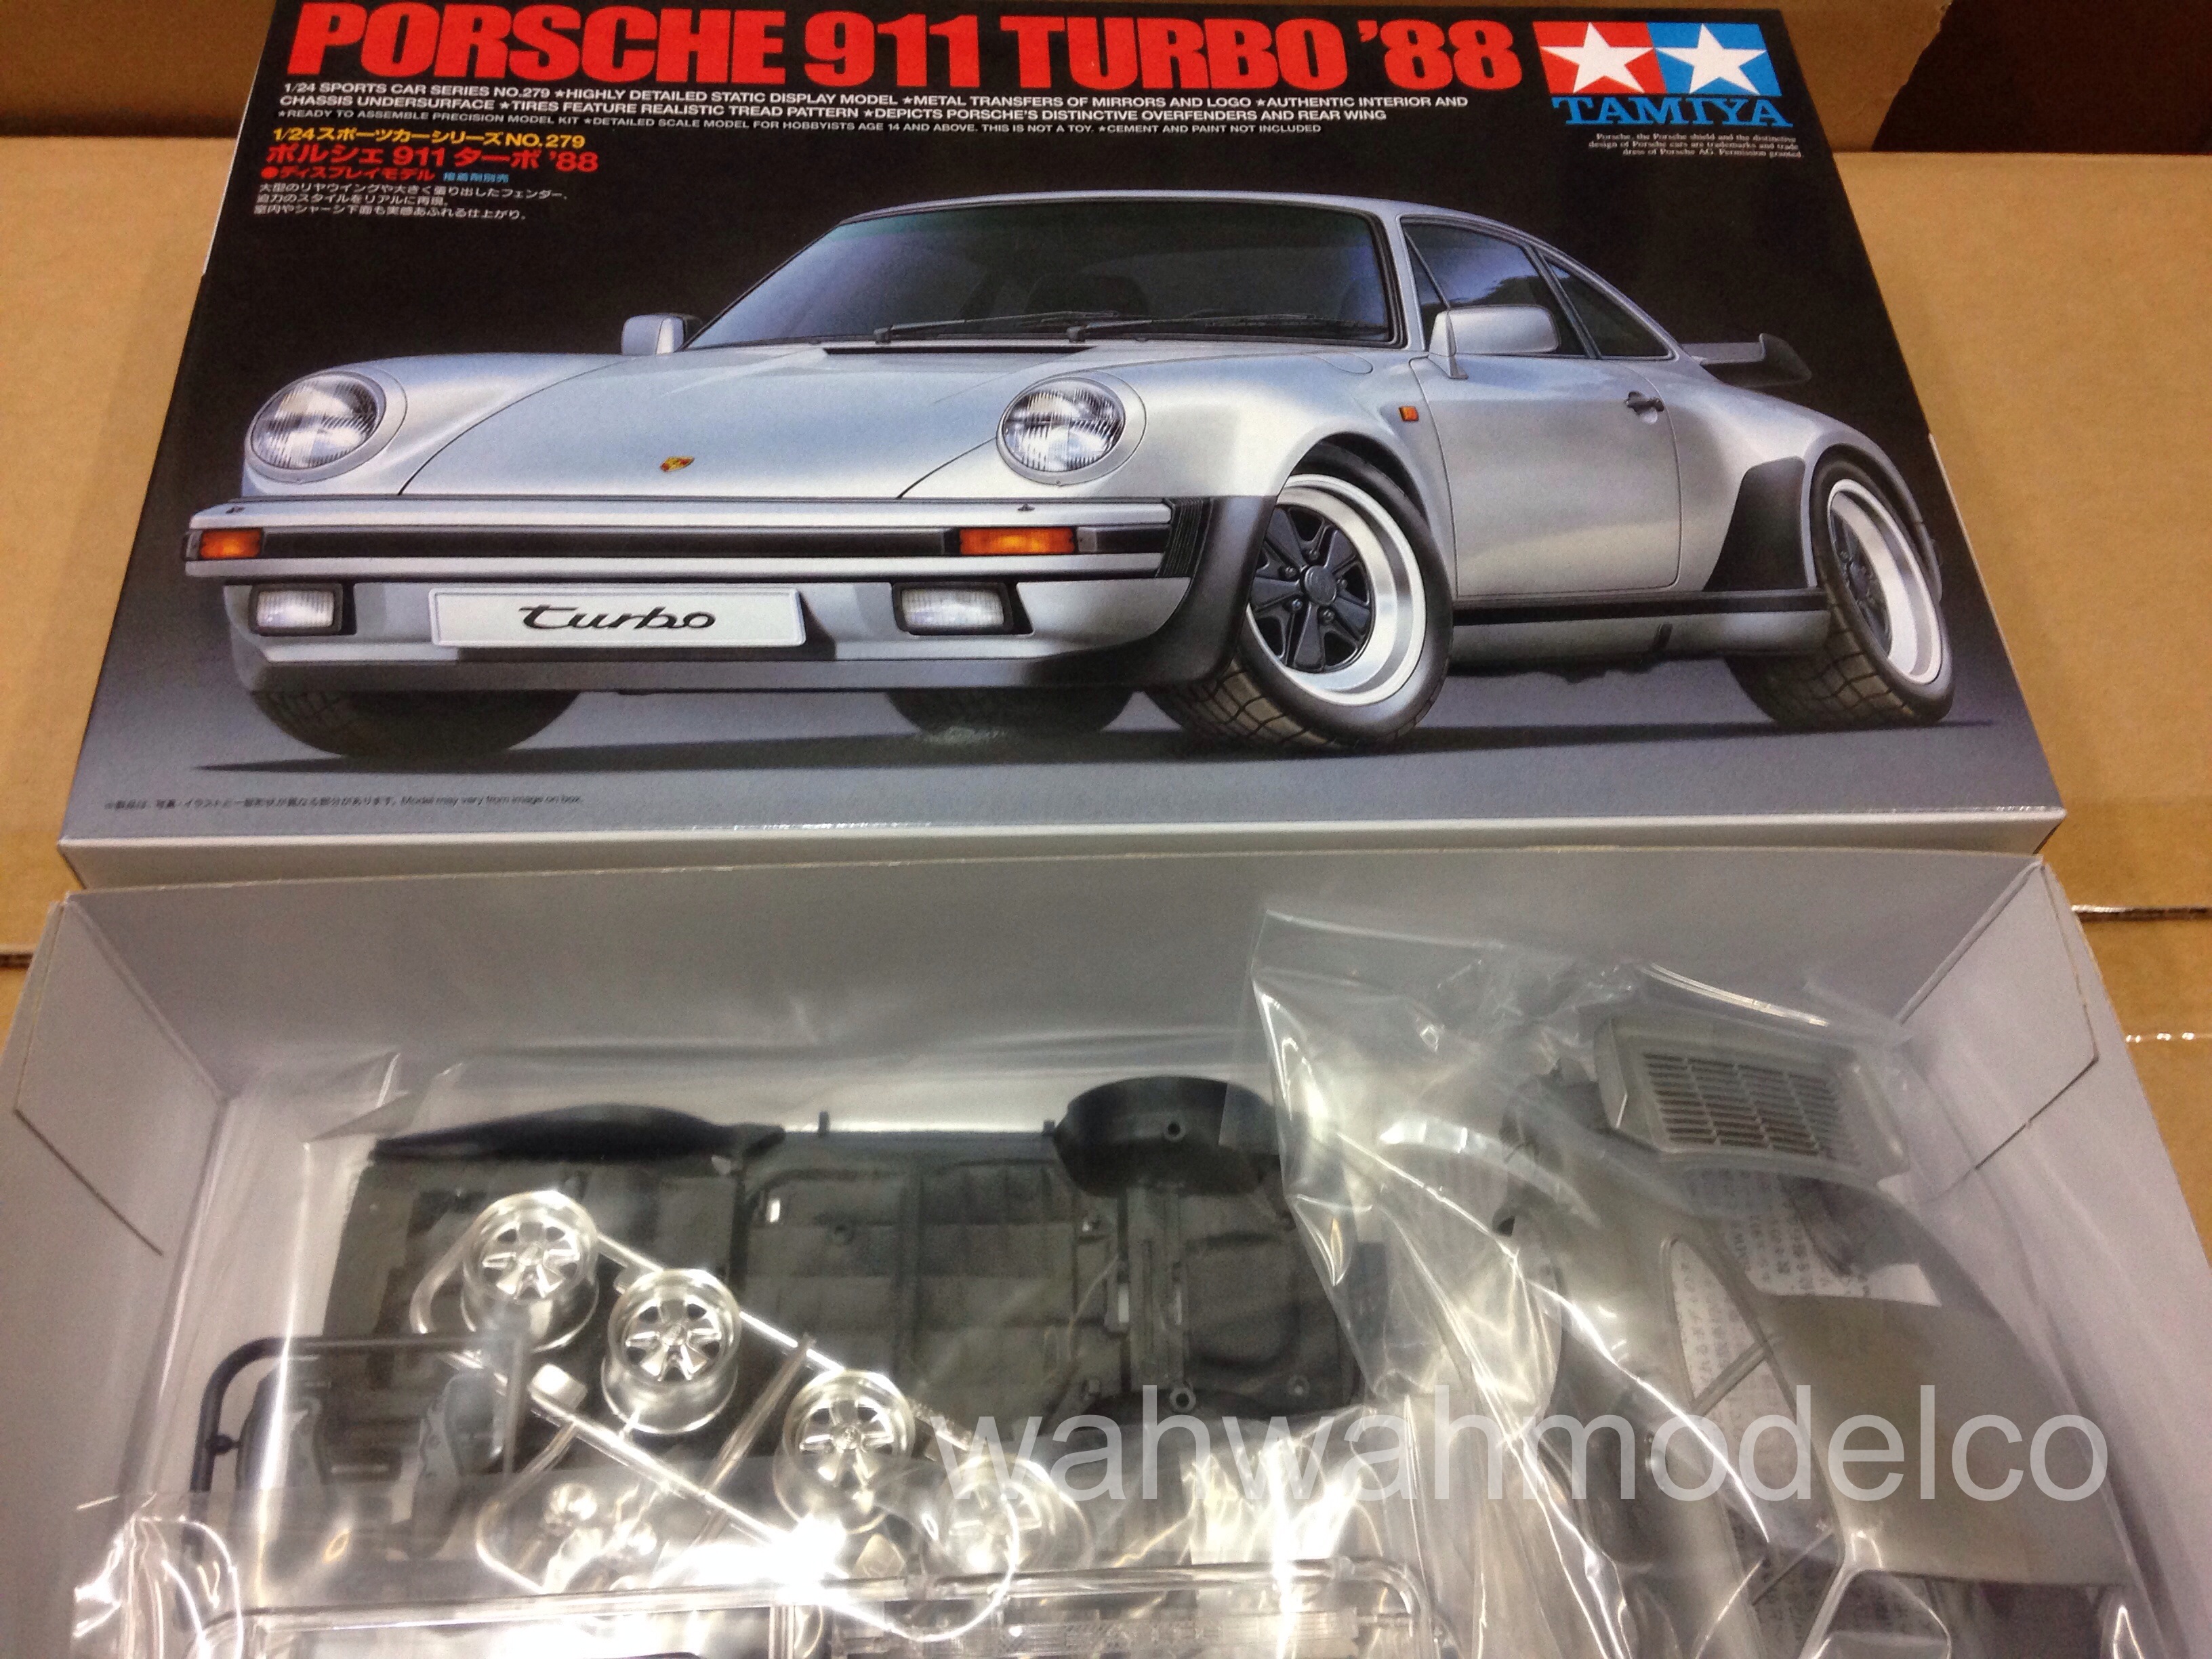 Tamiya 24279 - Maquette de voiture de sport : Porsche 911 turbo 1/24